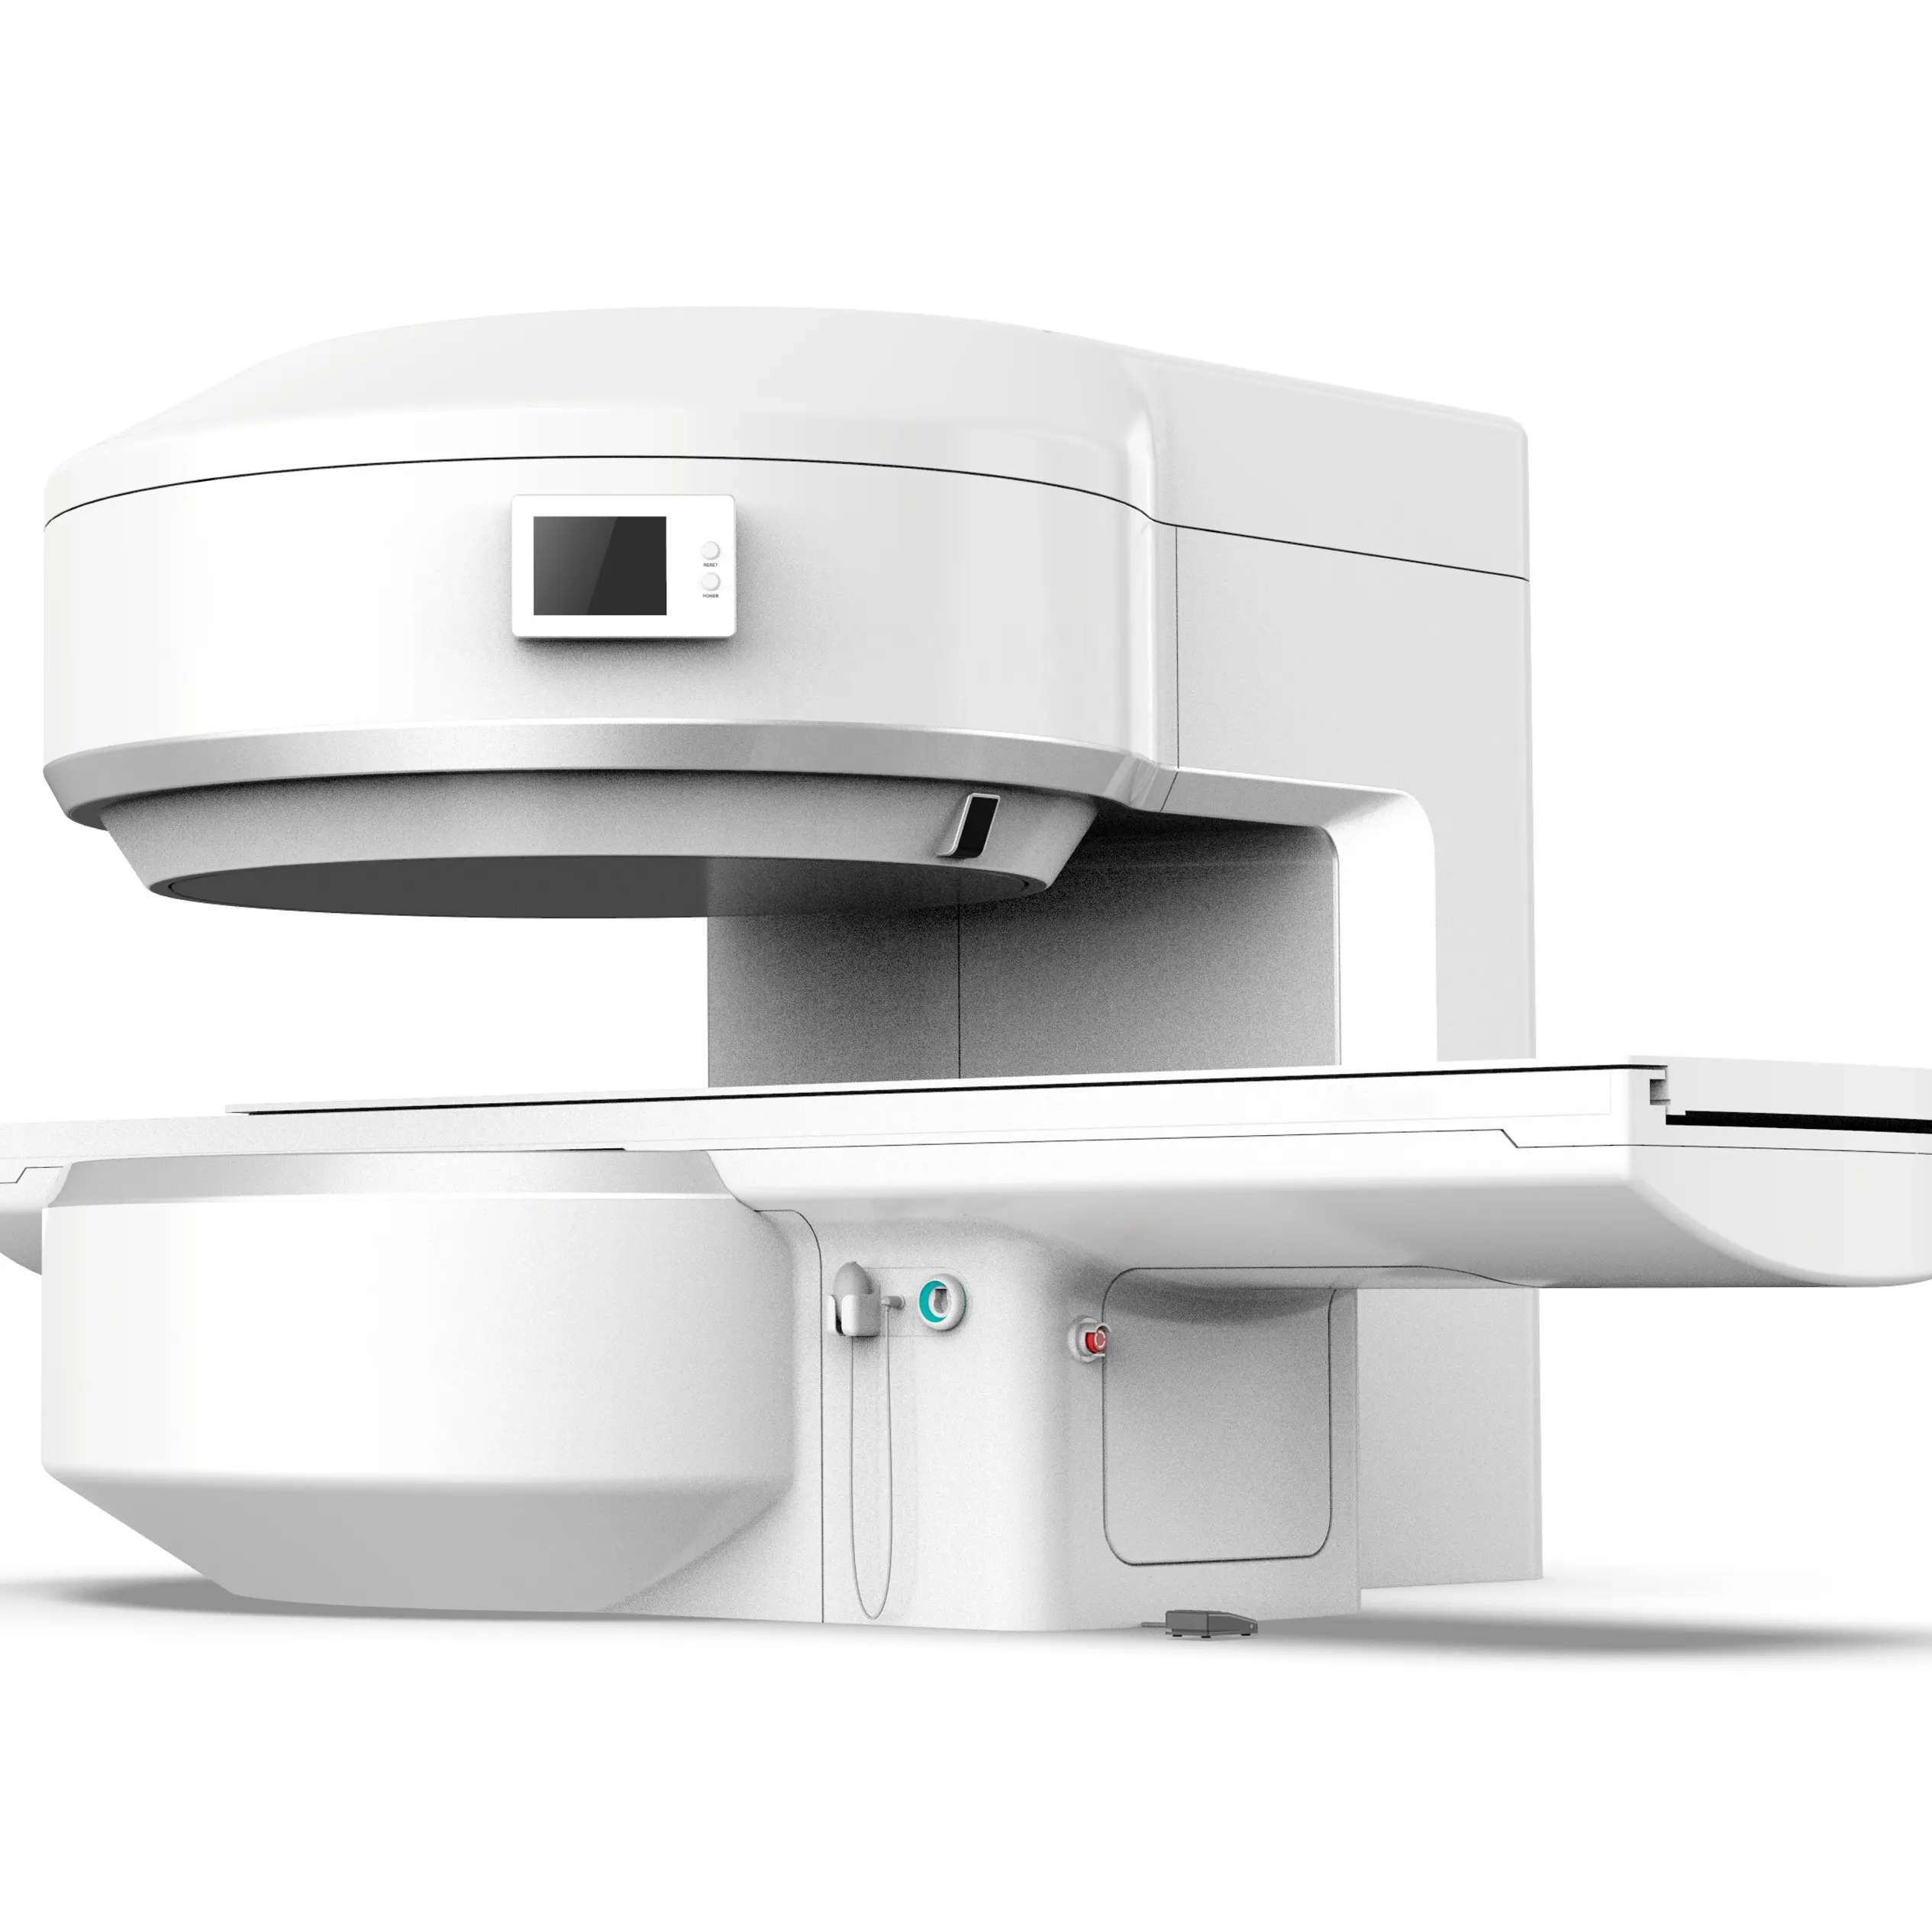 Machine à scanner irm pour hôpital 0.3T, prix msmri13